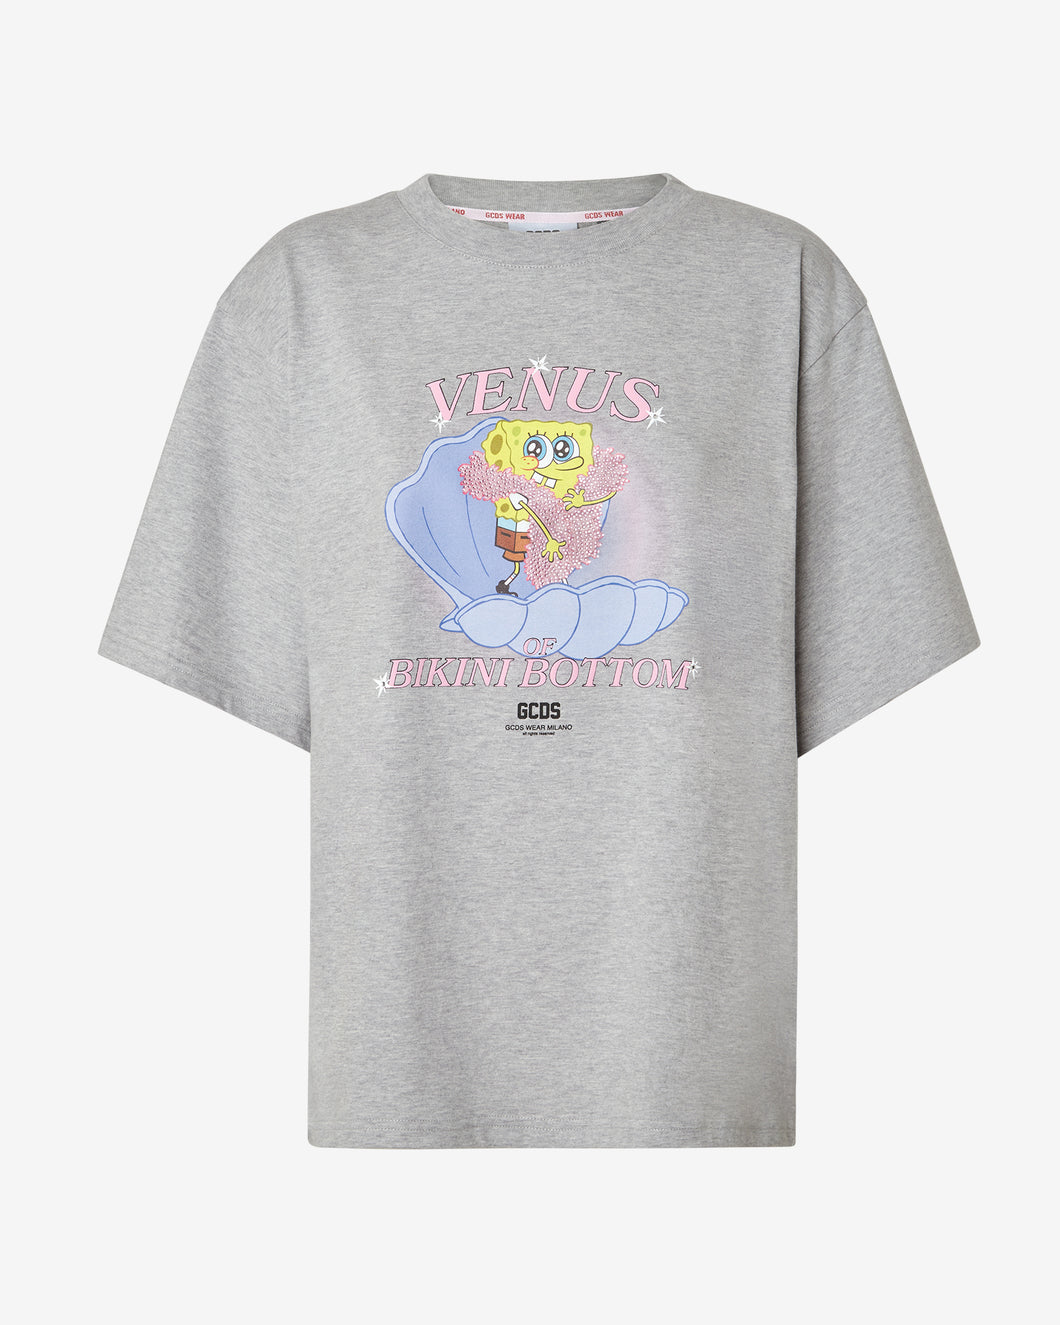 Spongebob Venus T-shirt : Women T-shirts Grey | GCDS